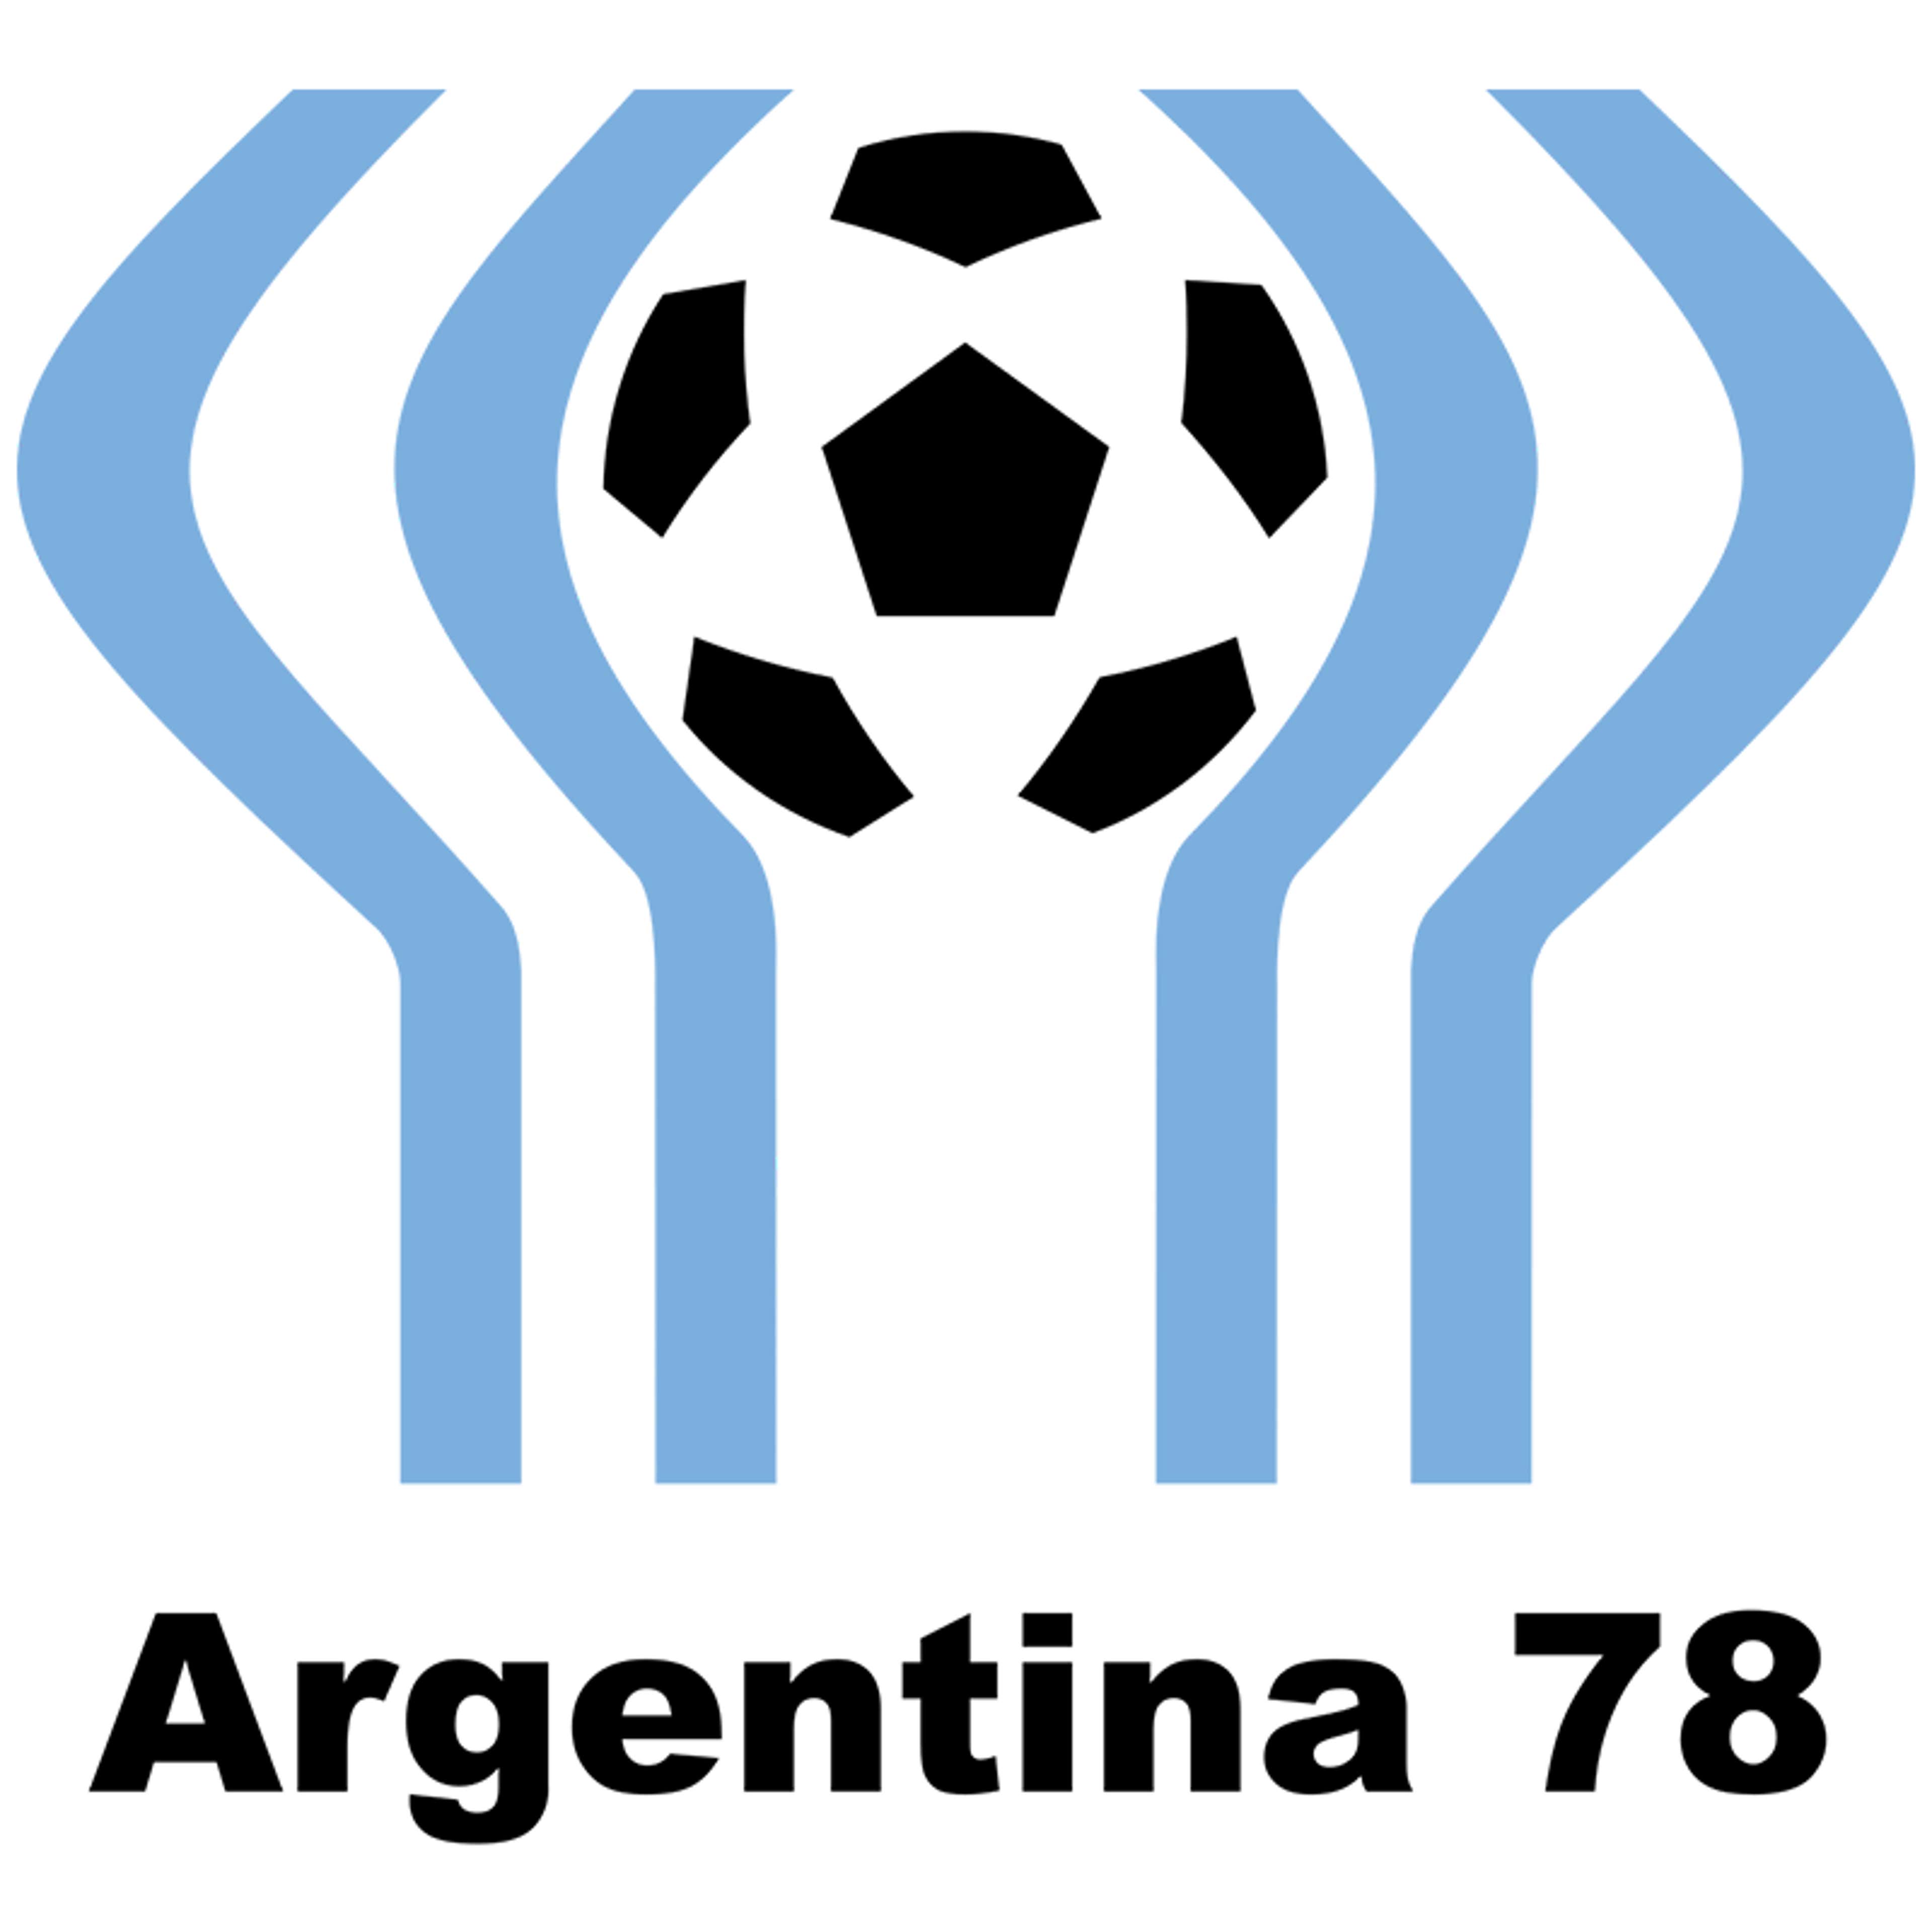 FIFA World Cup All Logos 1930 - 2022 